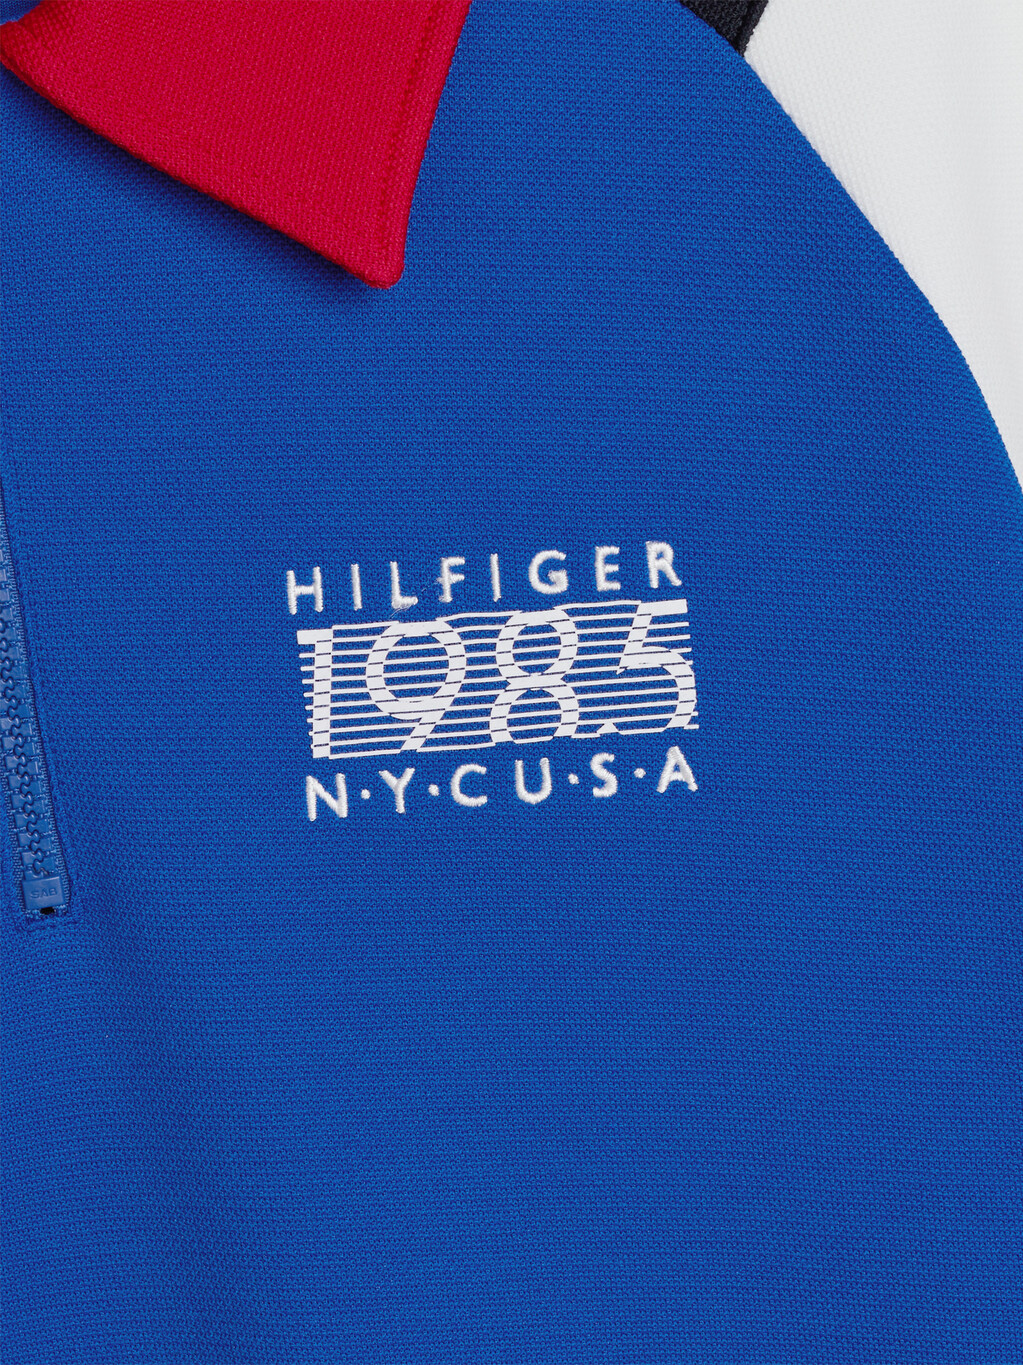 Hilfiger Team Regular Fit Stripe Polo, Ultra Blue/Multi, hi-res